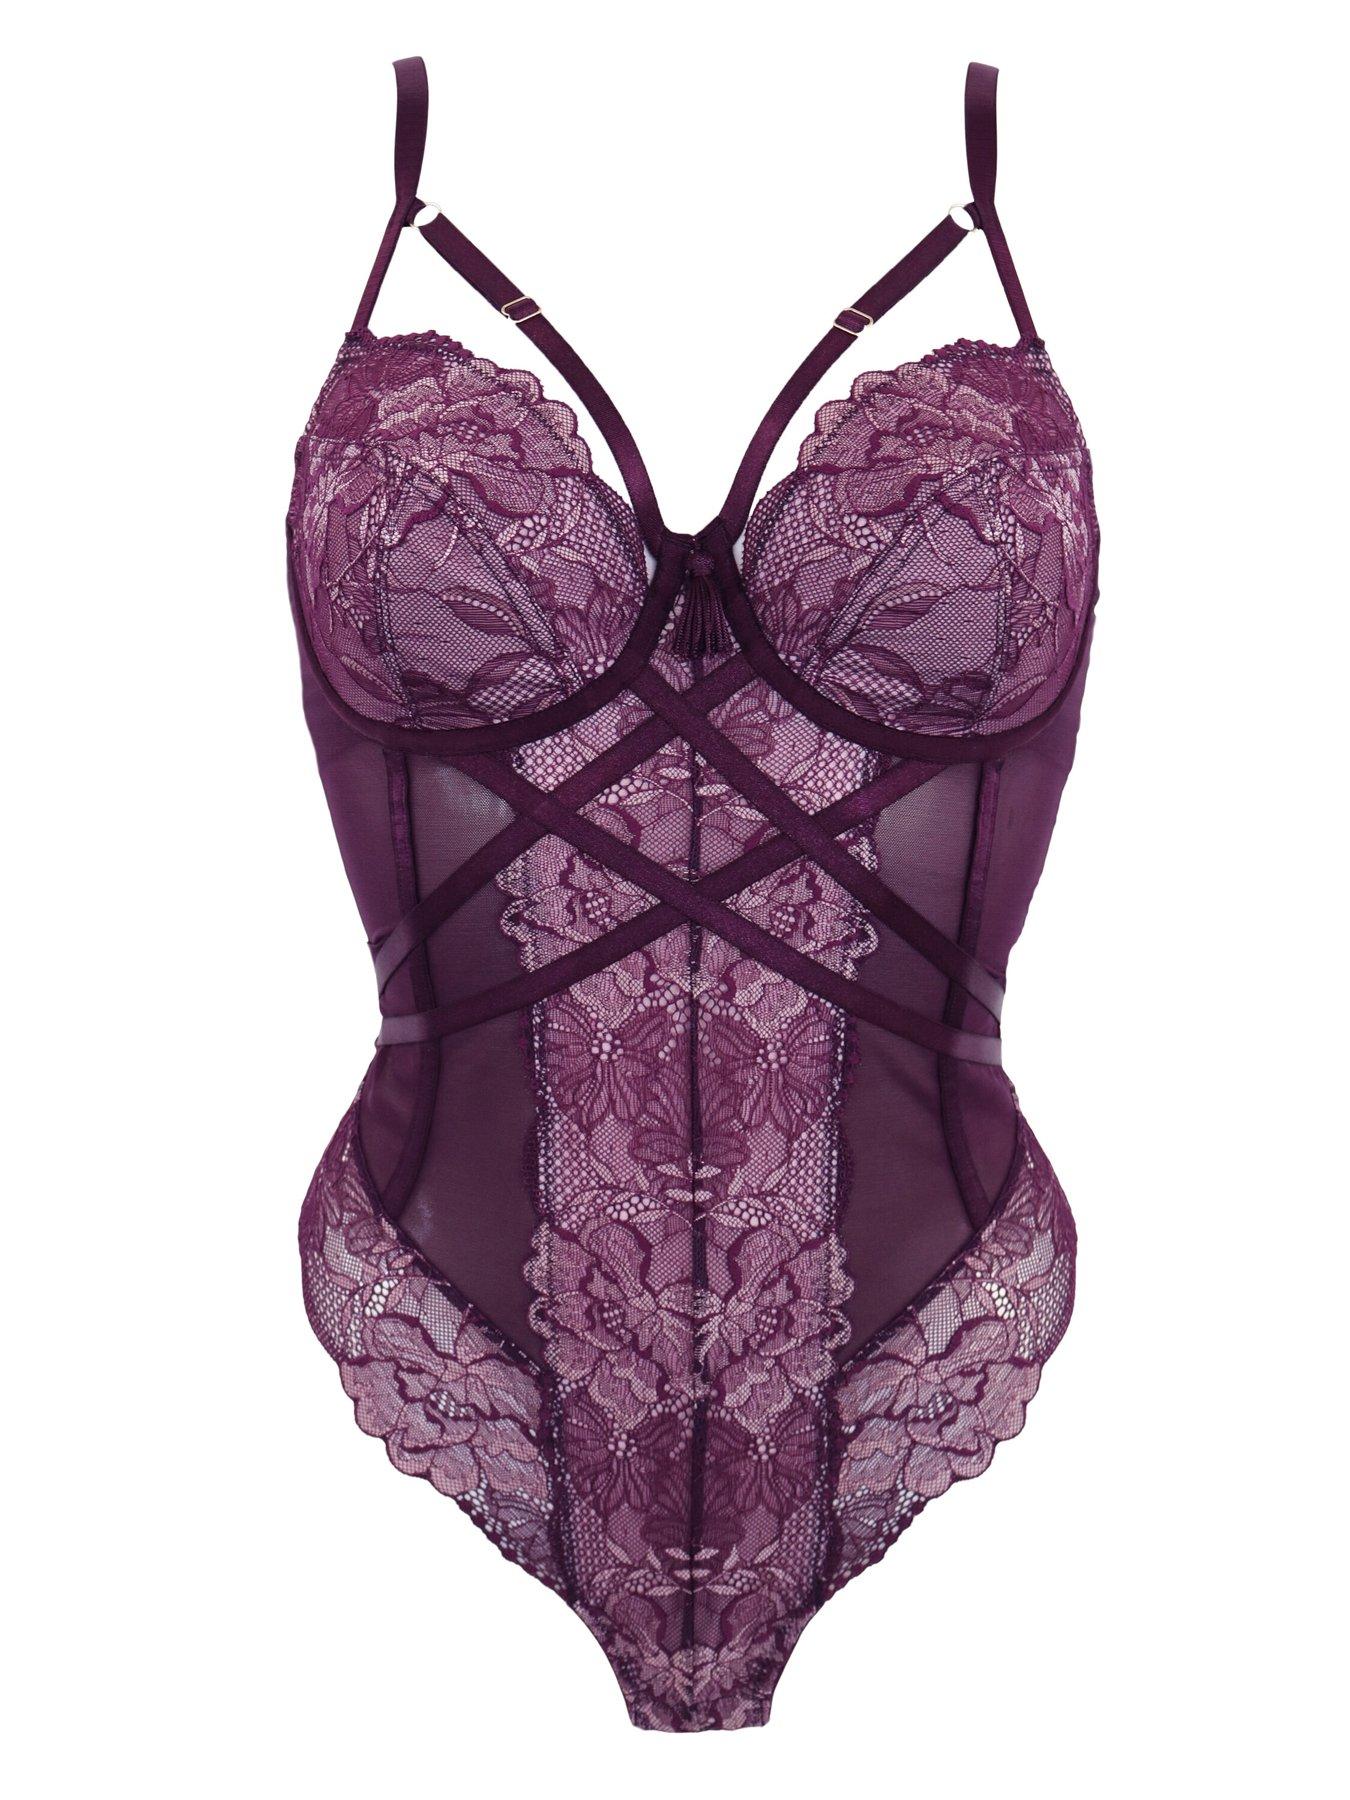 Victoria's Secret, Intimates & Sleepwear, Victorias Secret 34c Longline  Bra Set M Crotchless Panty Lilac Purple Lace